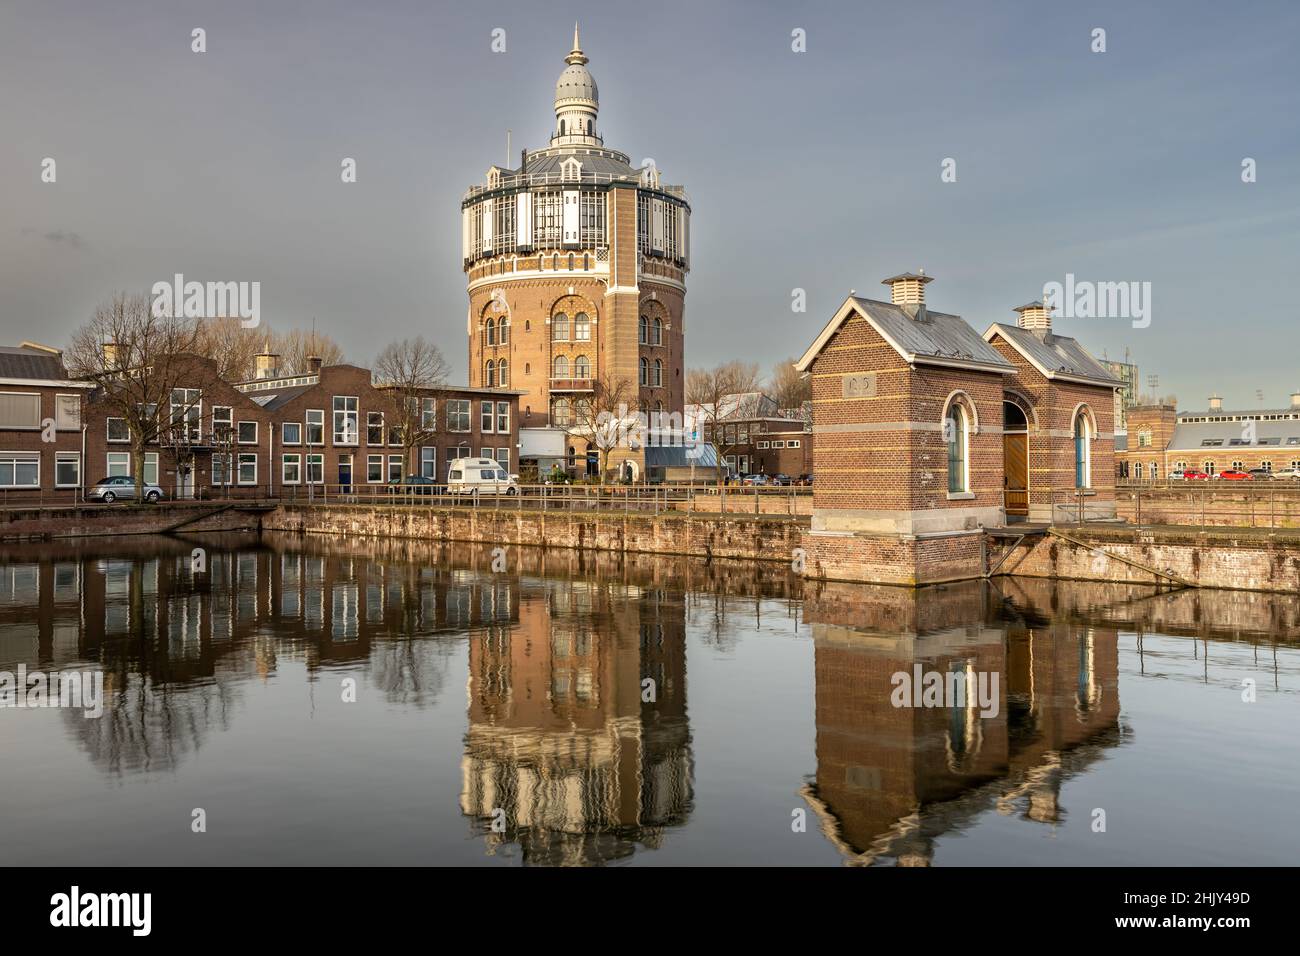 La storica torre d'acqua ( Watertoren) De Esch, nel quartiere Kralingen, Rotterdam, Paesi Bassi Foto Stock